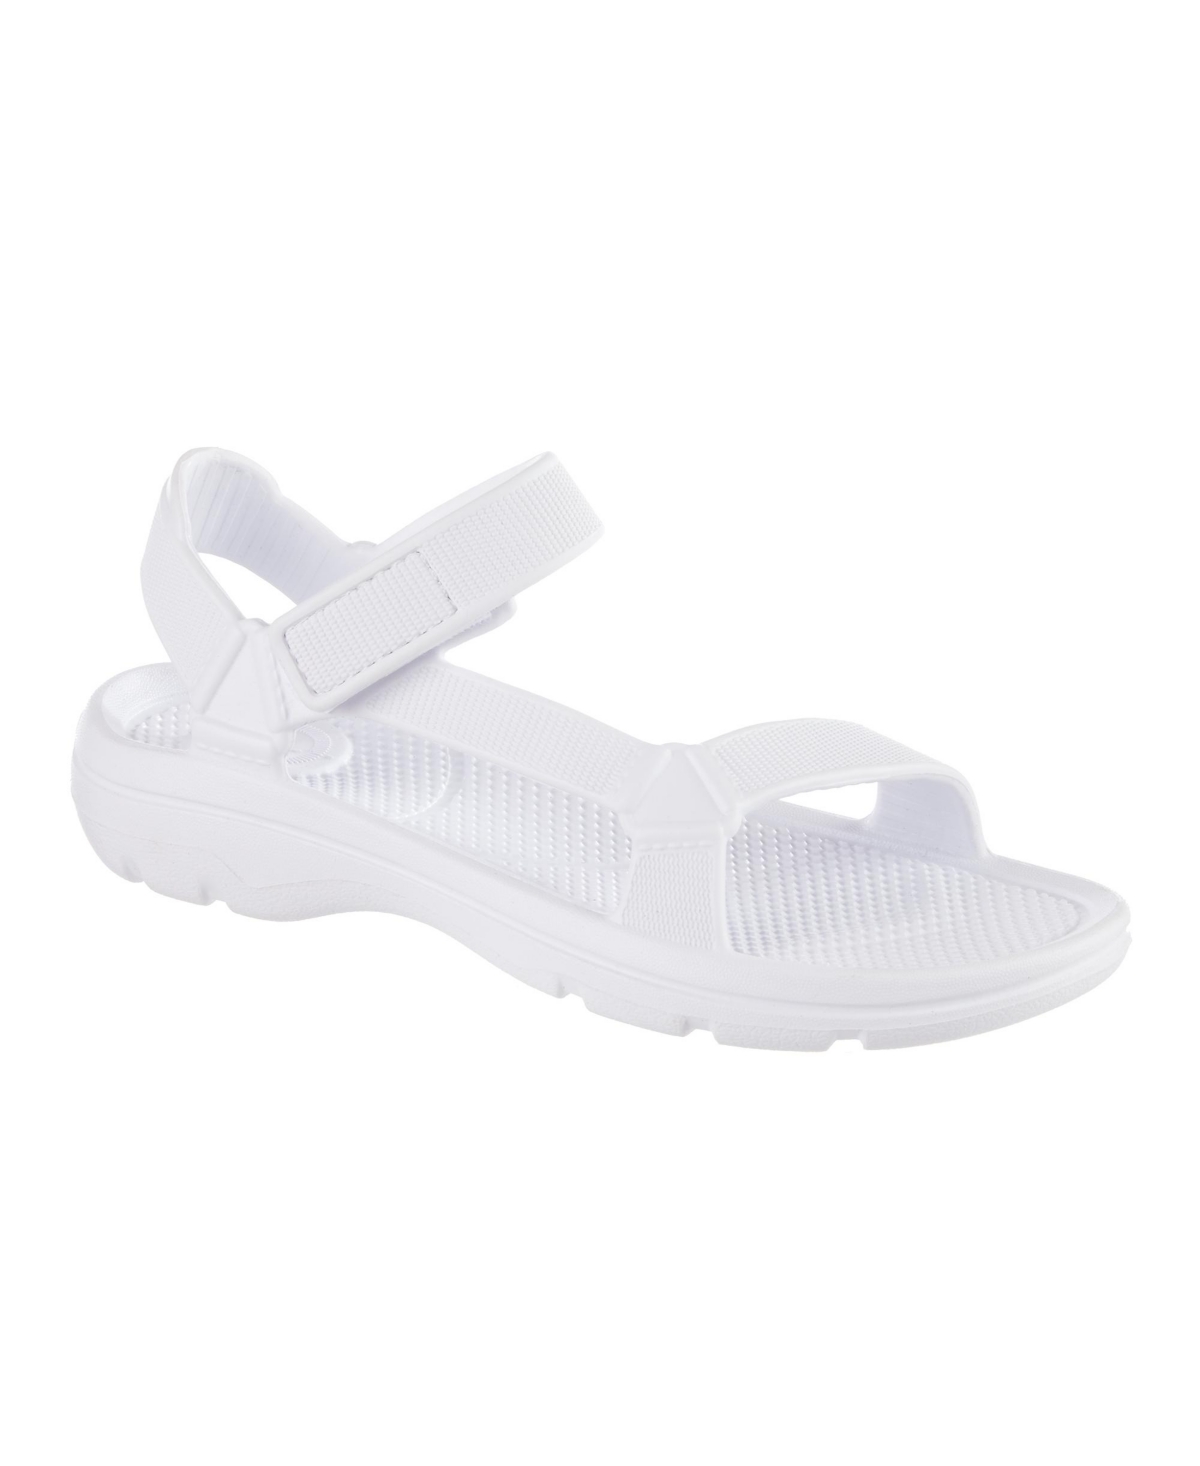 Women's Riley Adjustable Sport Sandals with Everywear - White